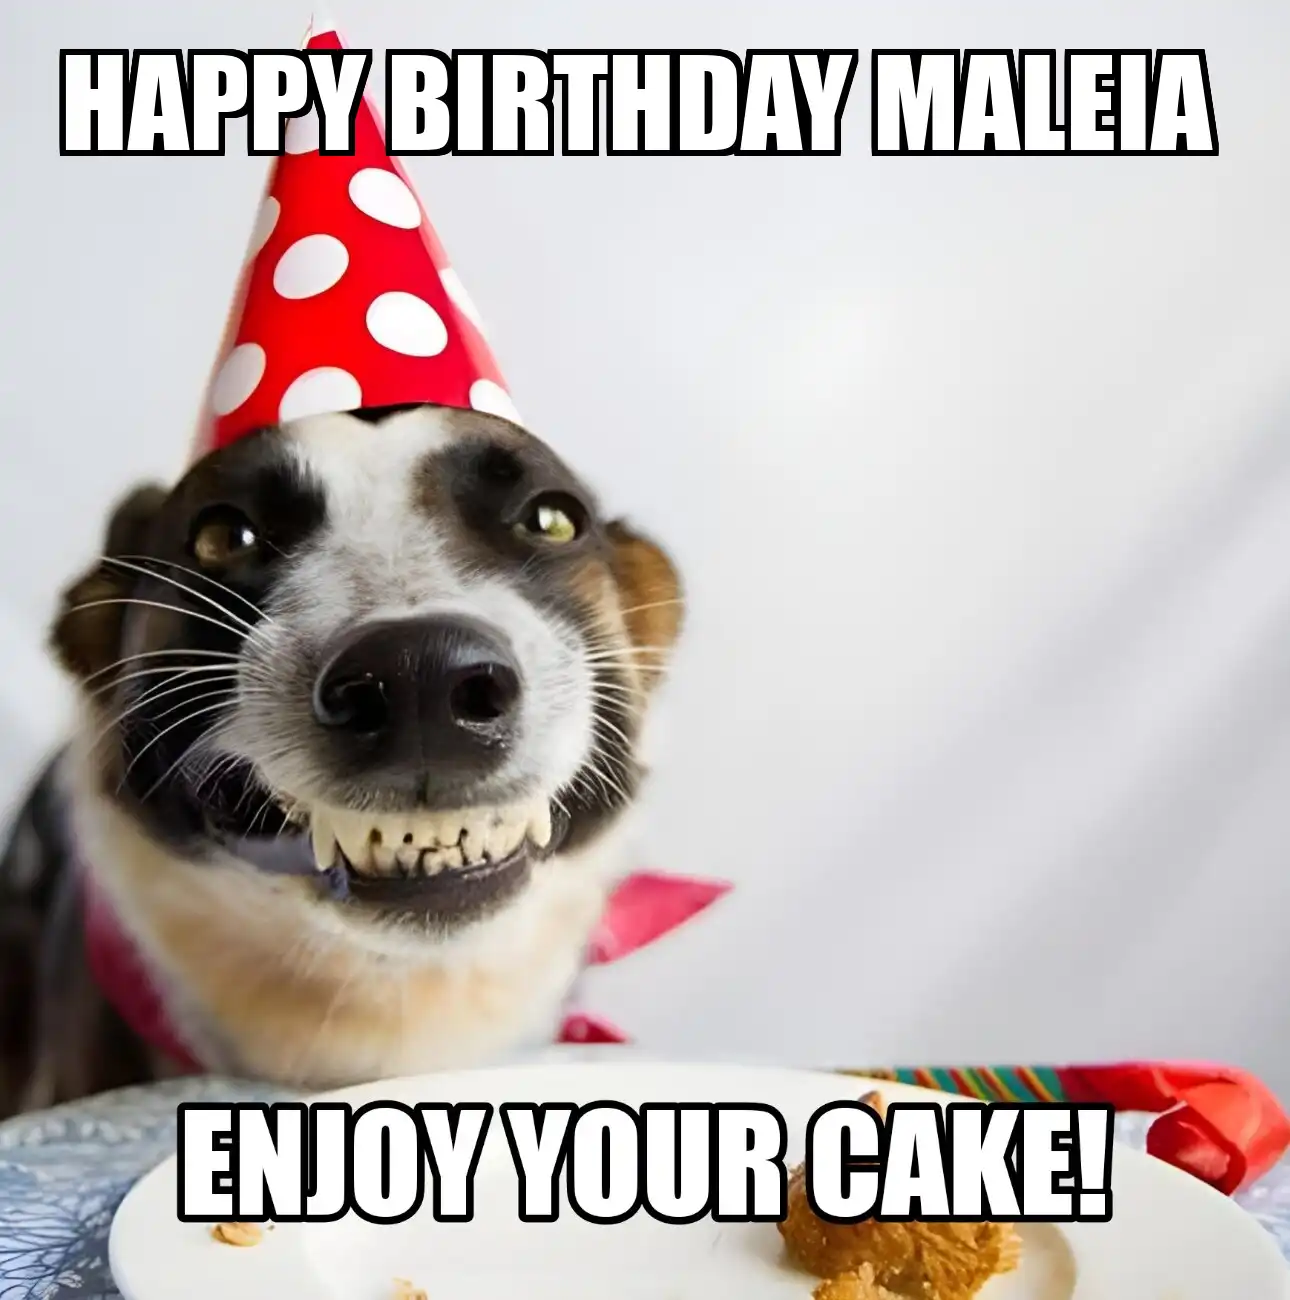 Happy Birthday Maleia Enjoy Your Cake Dog Meme